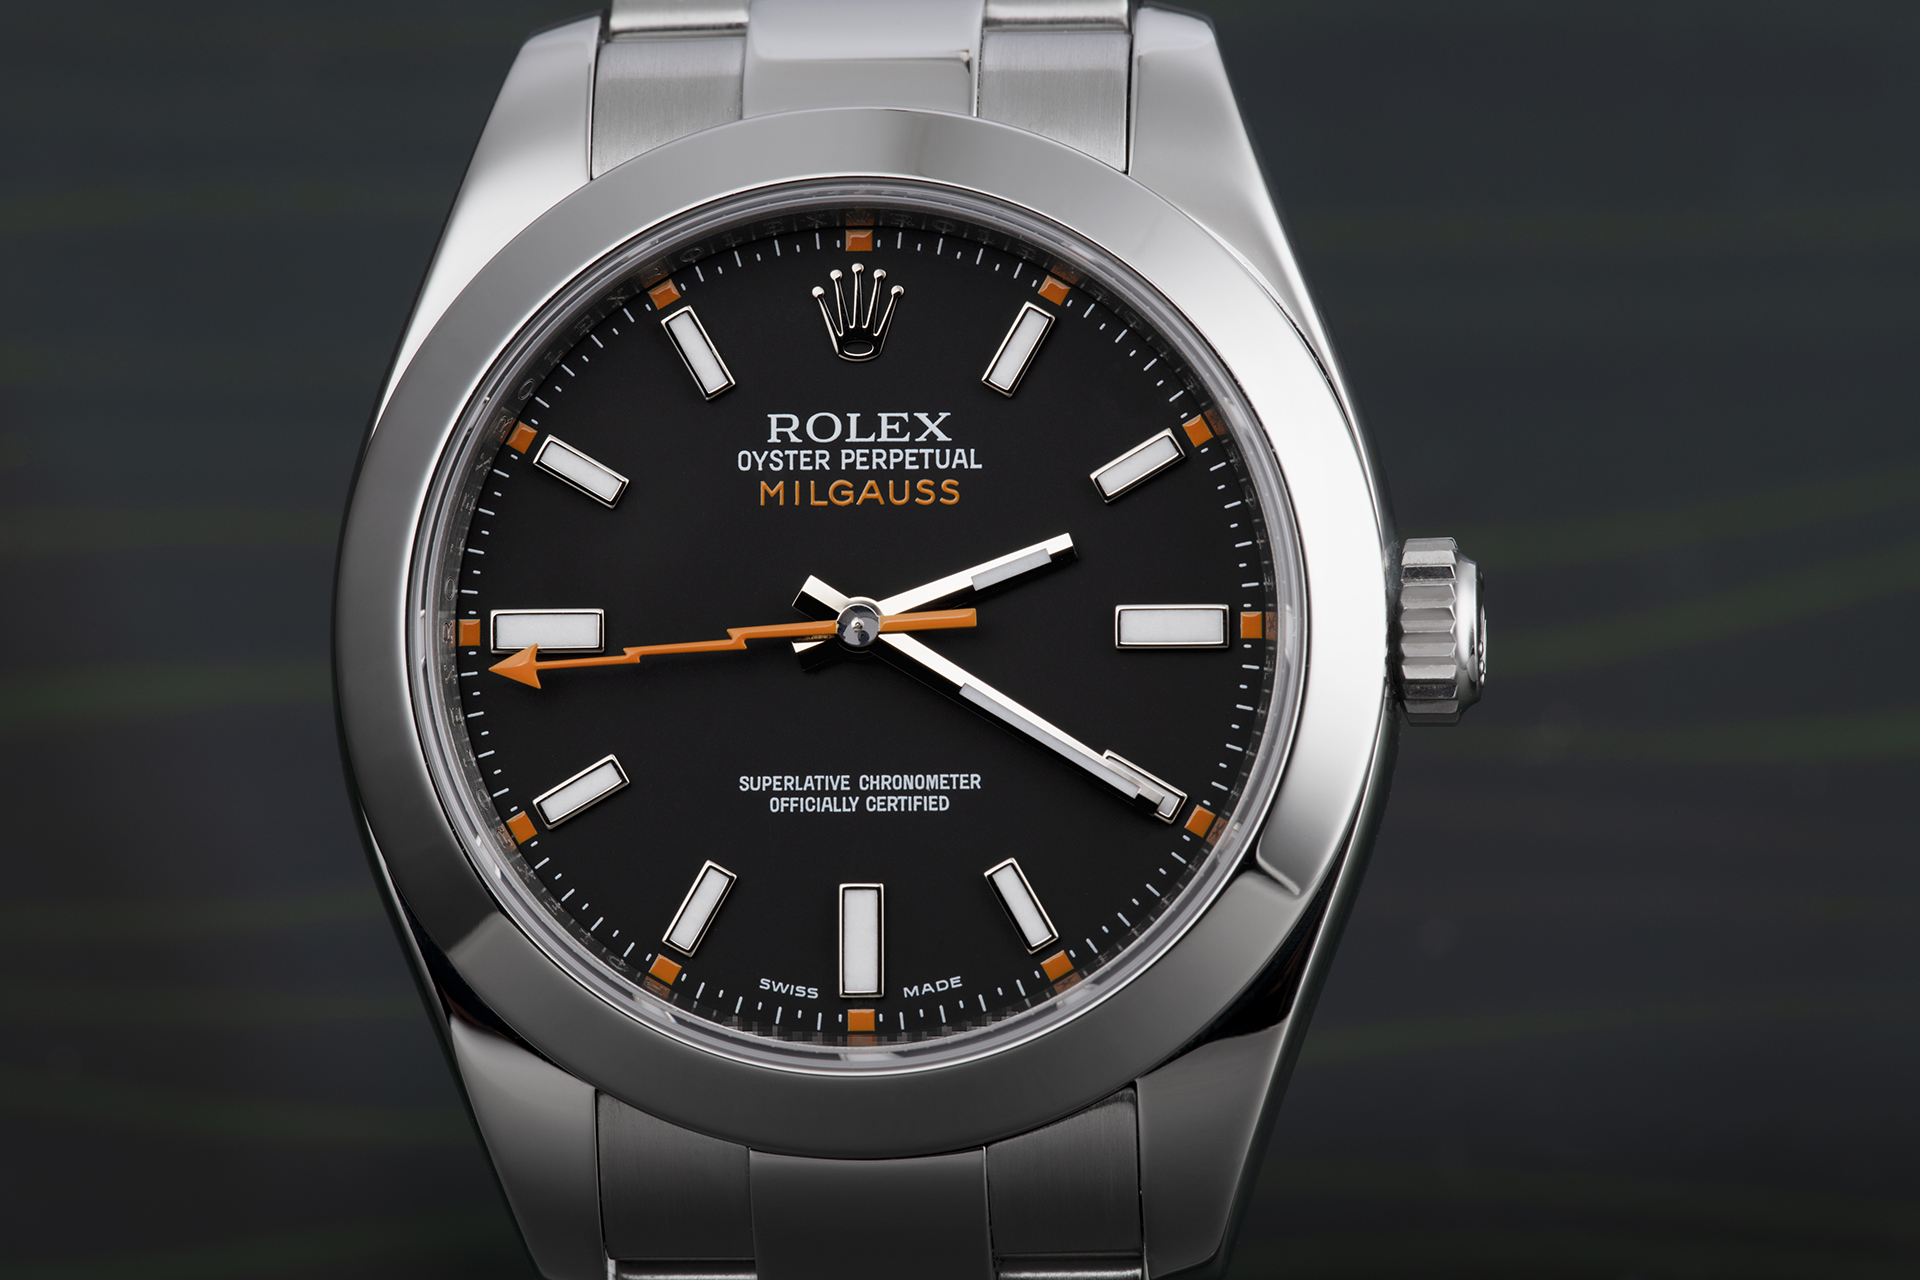 Rolex Milgauss Watches | ref 116400 | Box & Certificate | The Watch Club